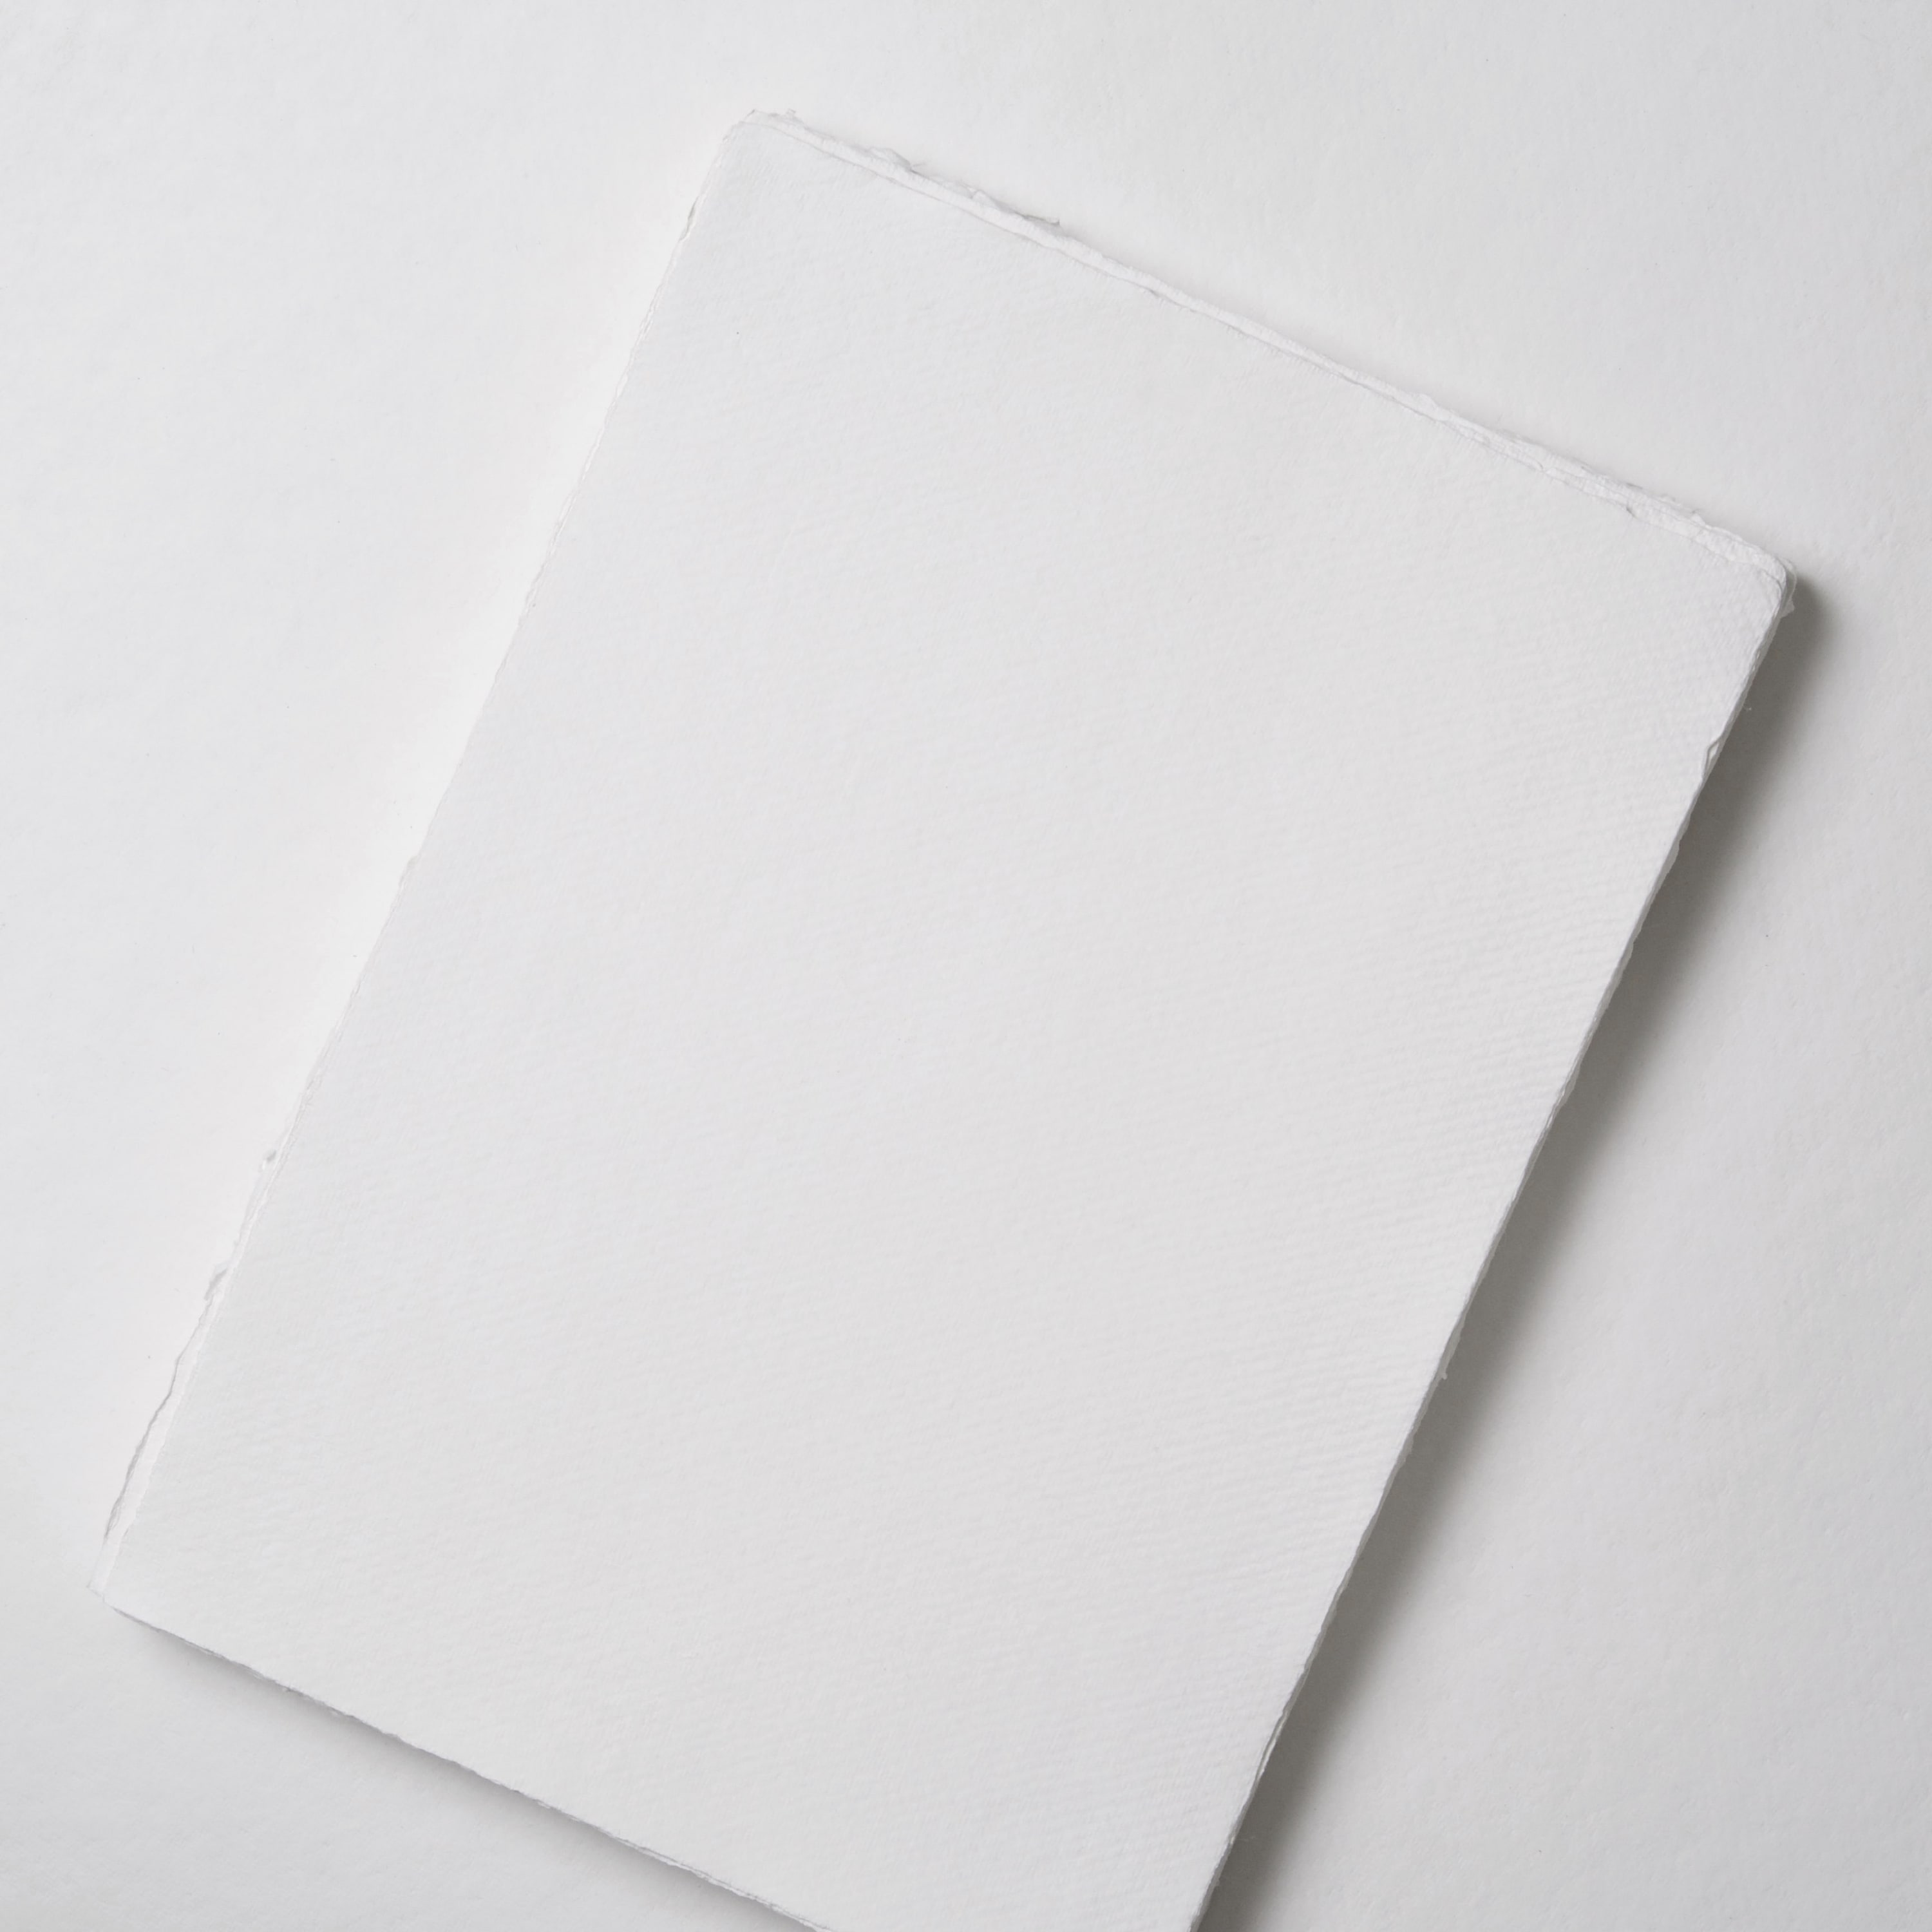 White, Place card, 300 gsm – Deckle edge paper – Indian Cotton Paper Co.